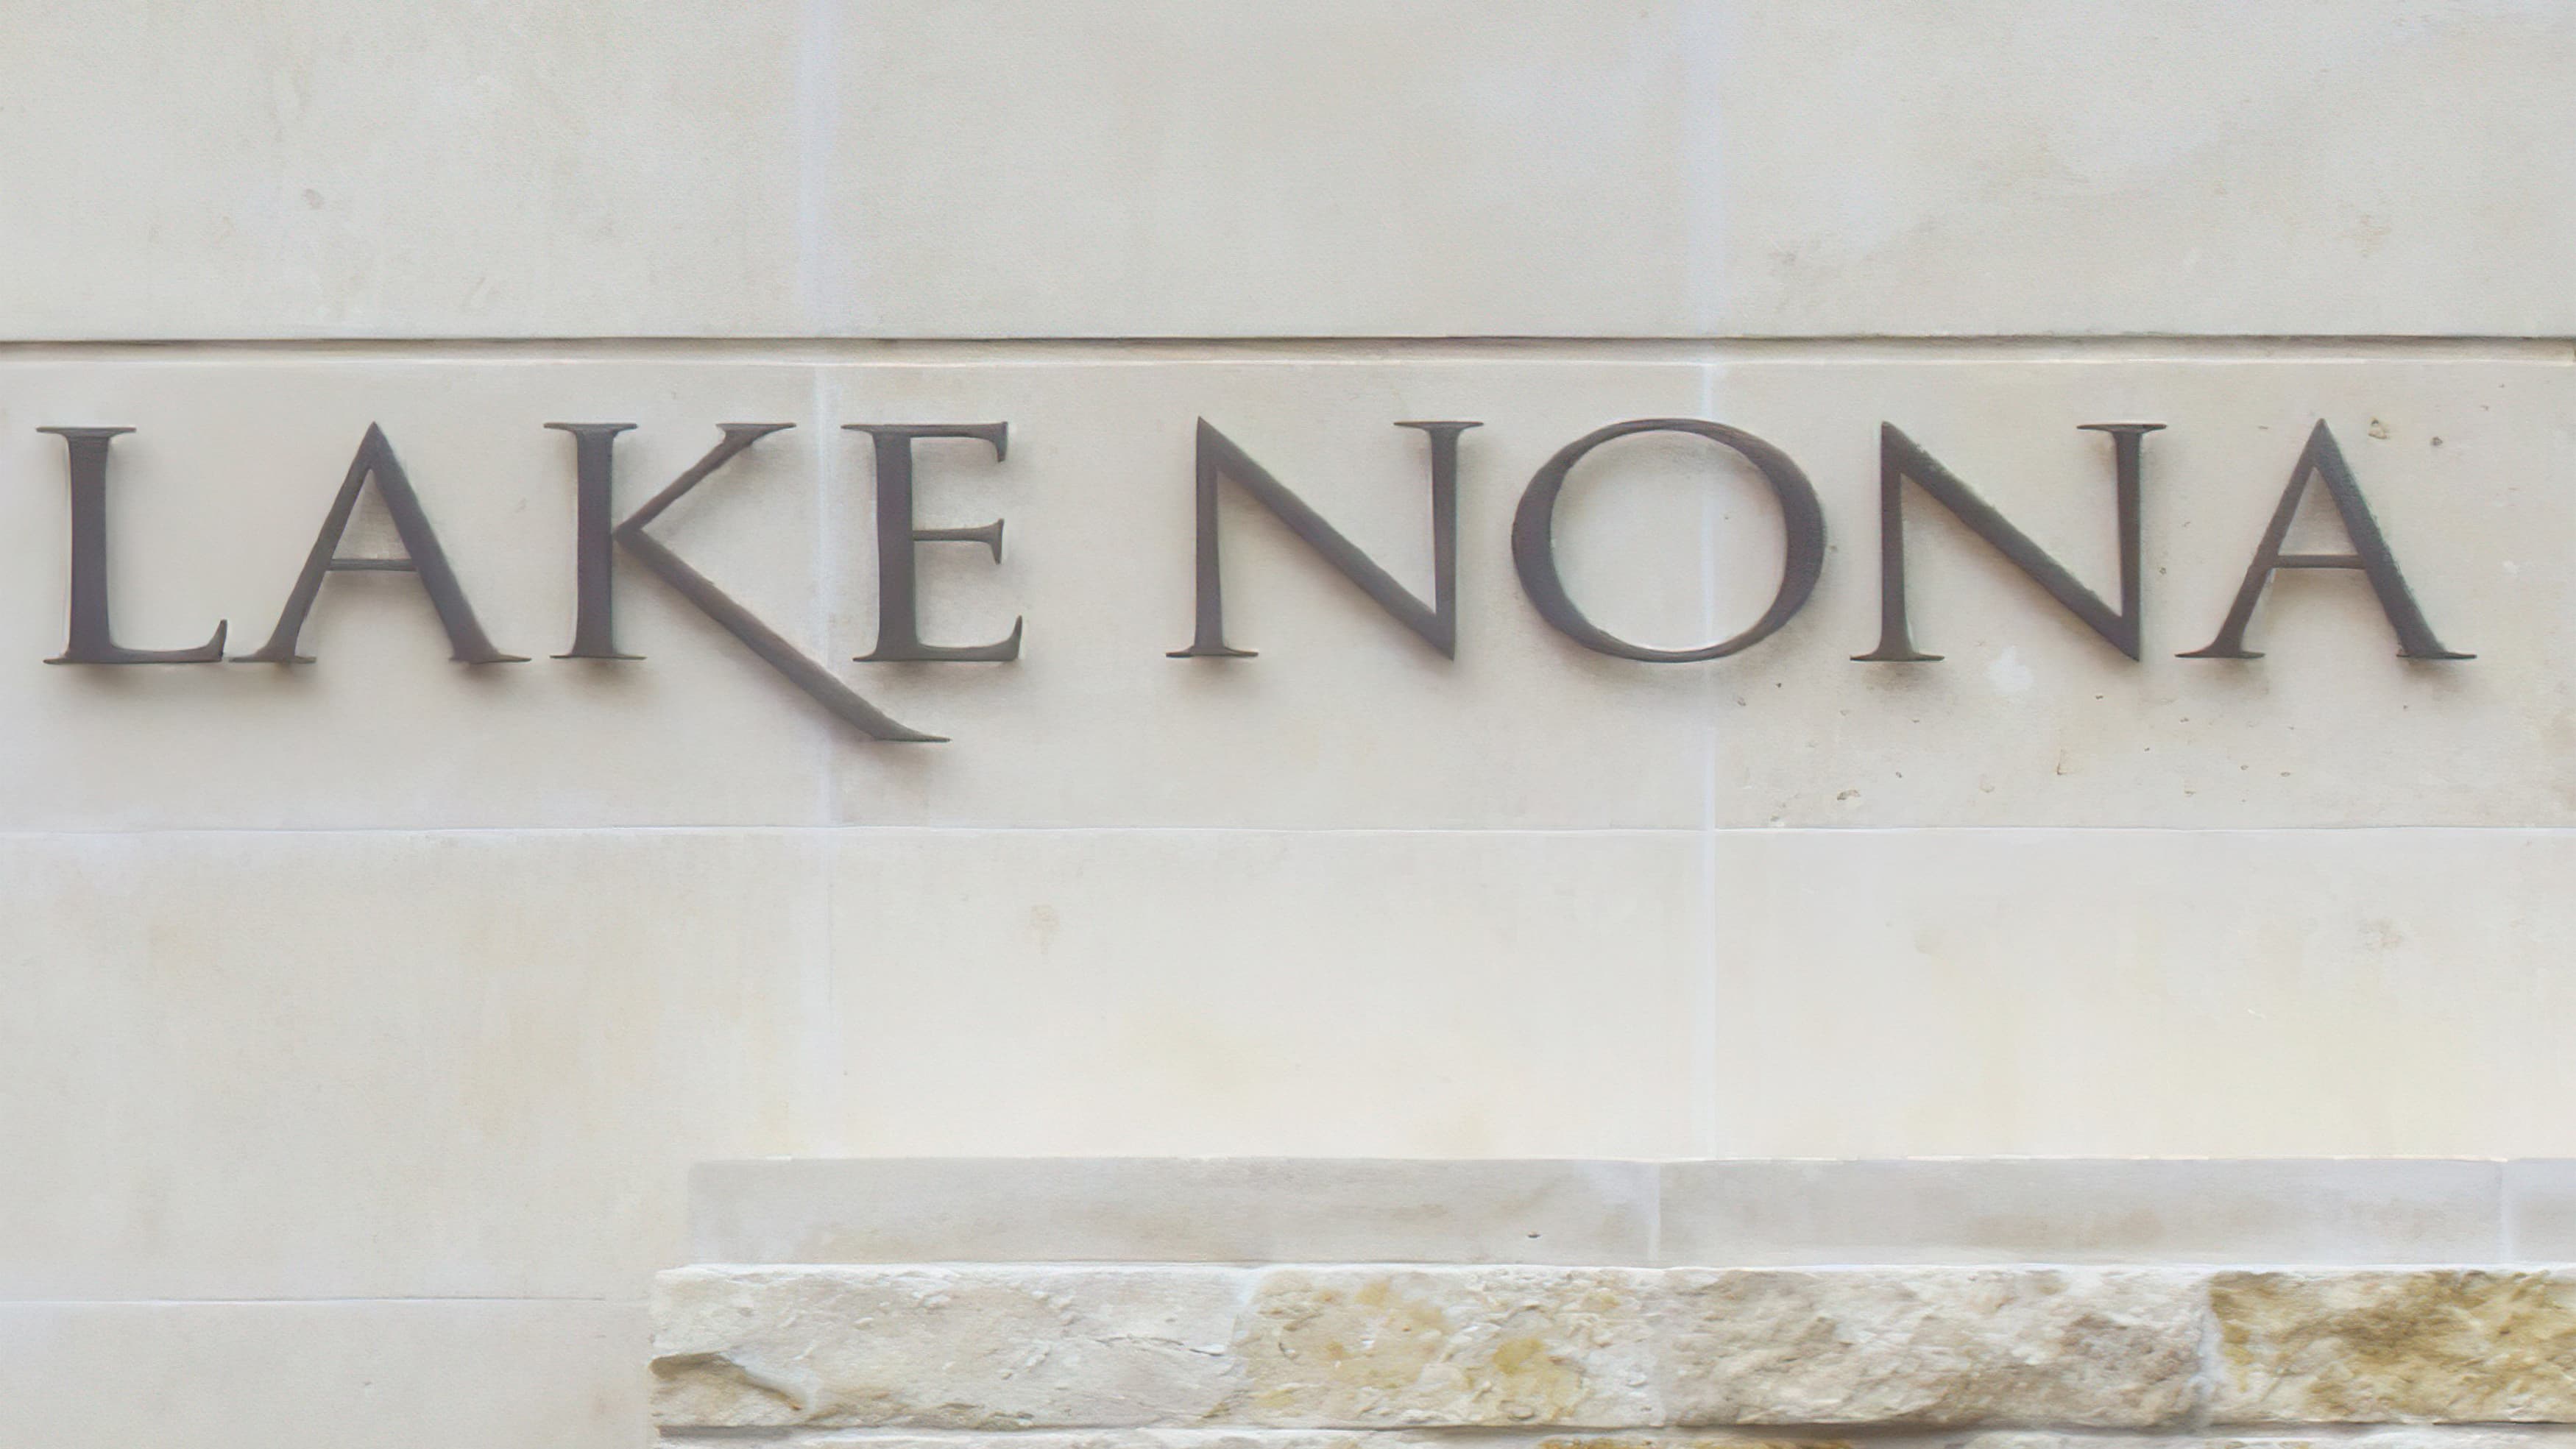 Dimensional Lake Nona brand identity applied to limestone monument